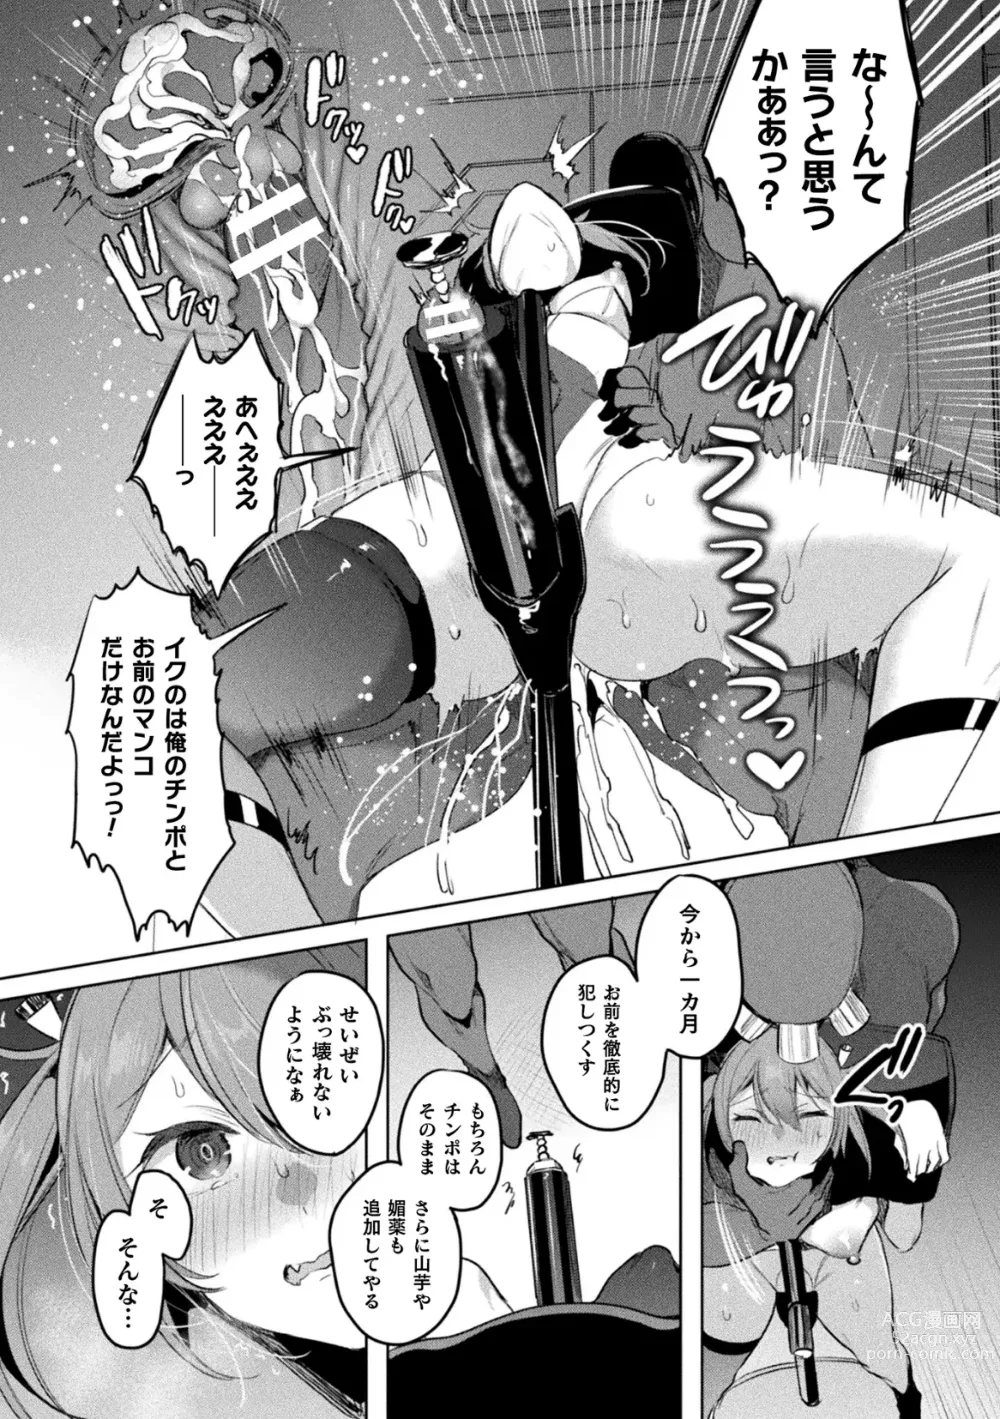 Page 16 of manga Kukkoro Heroines Vol. 35